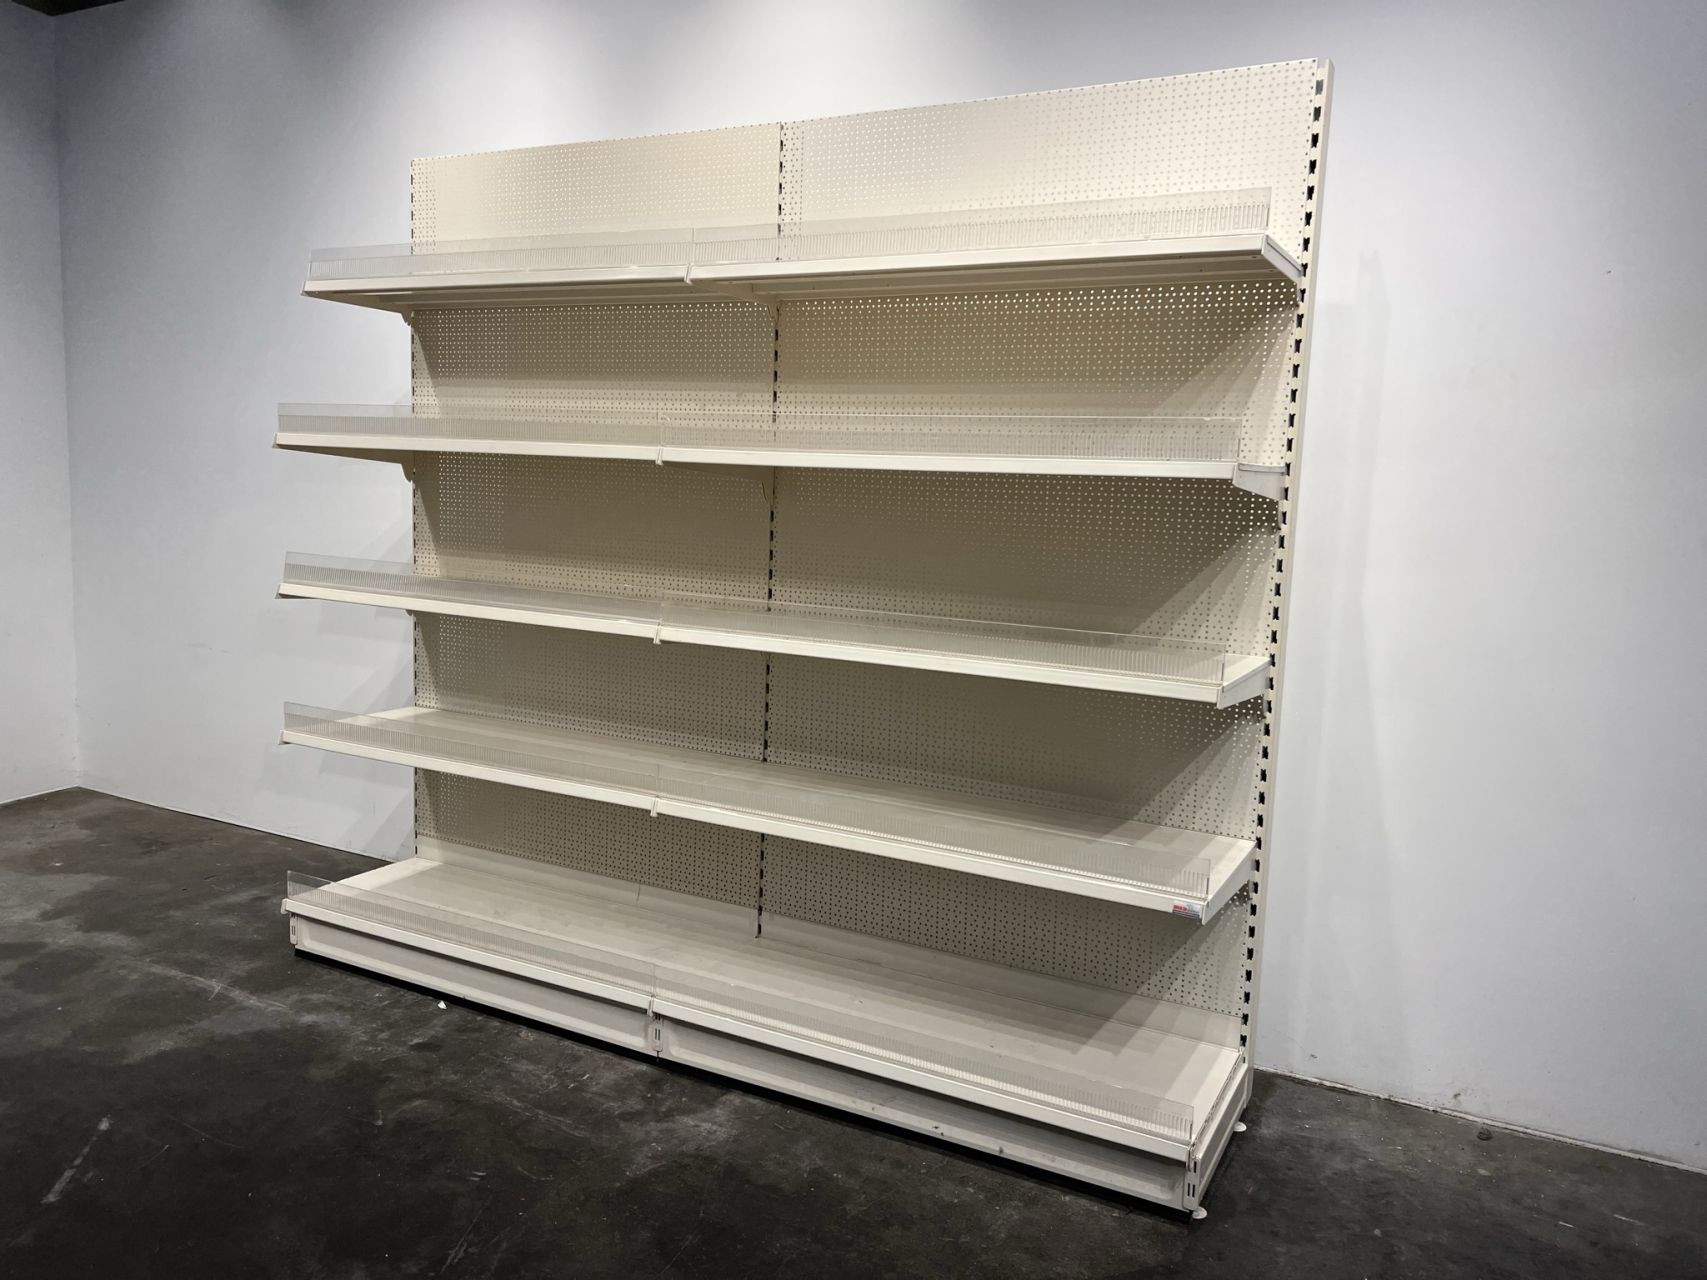 Shelving system / wholesale market  shelving / light heavy duty shelf, Tego, suitable for approx. 585 m²  